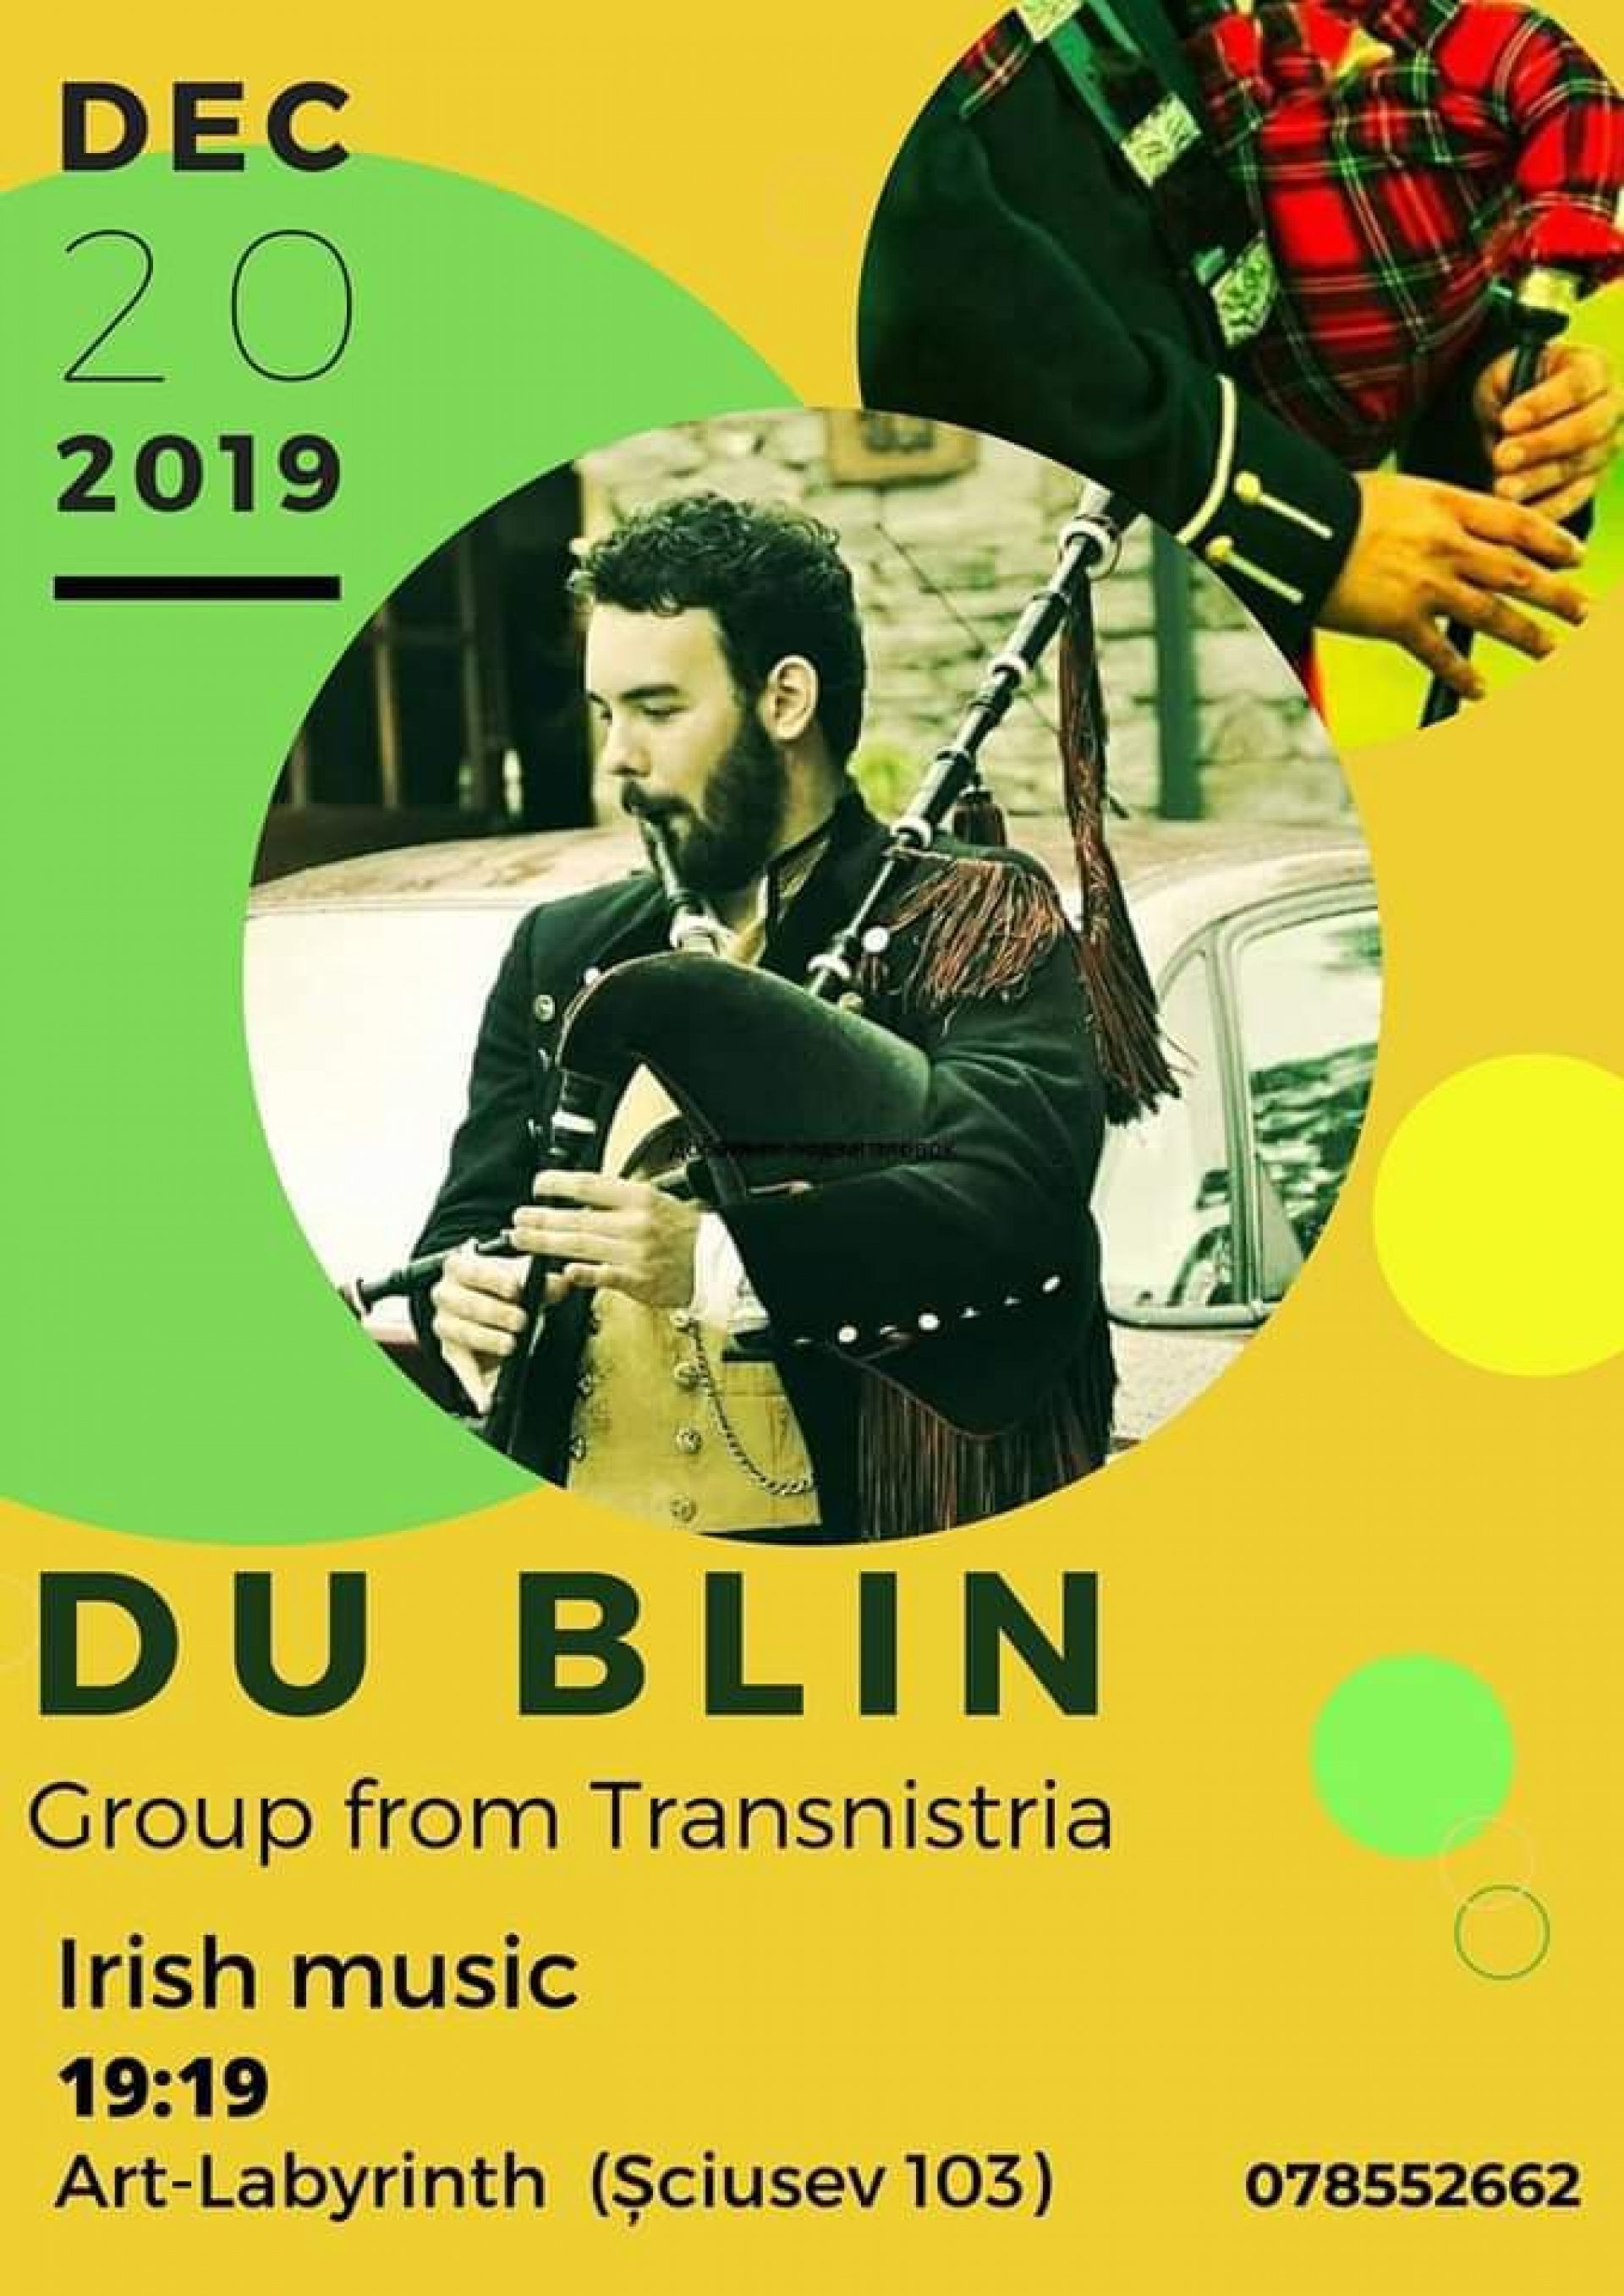 Irish Music Live Concert - The DU BLIN - (Transnistria)